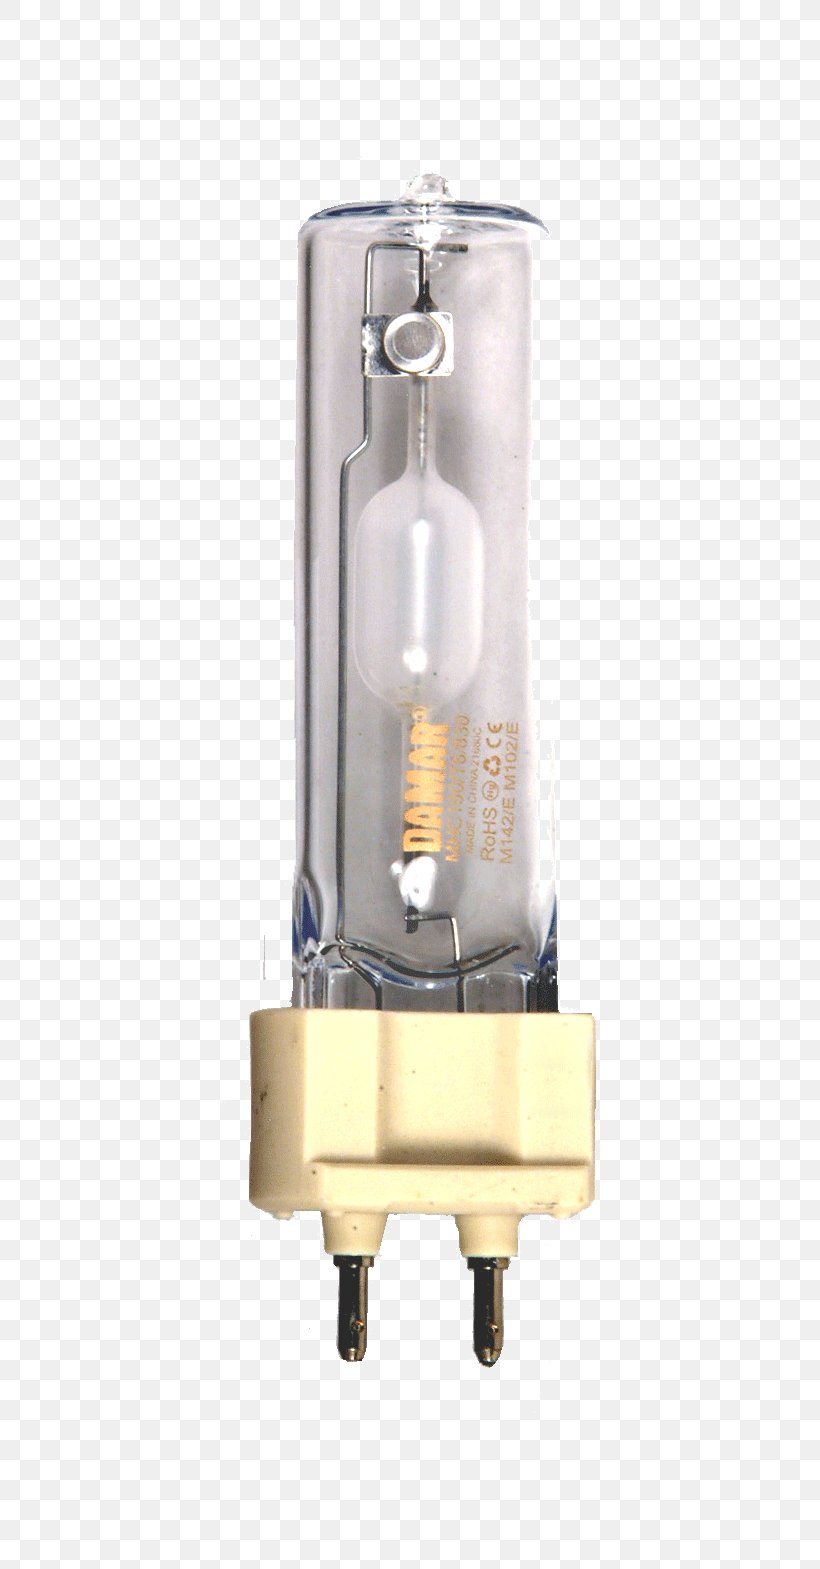 Lighting Metal-halide Lamp, PNG, 713x1569px, Lighting, Halide, Metalhalide Lamp Download Free